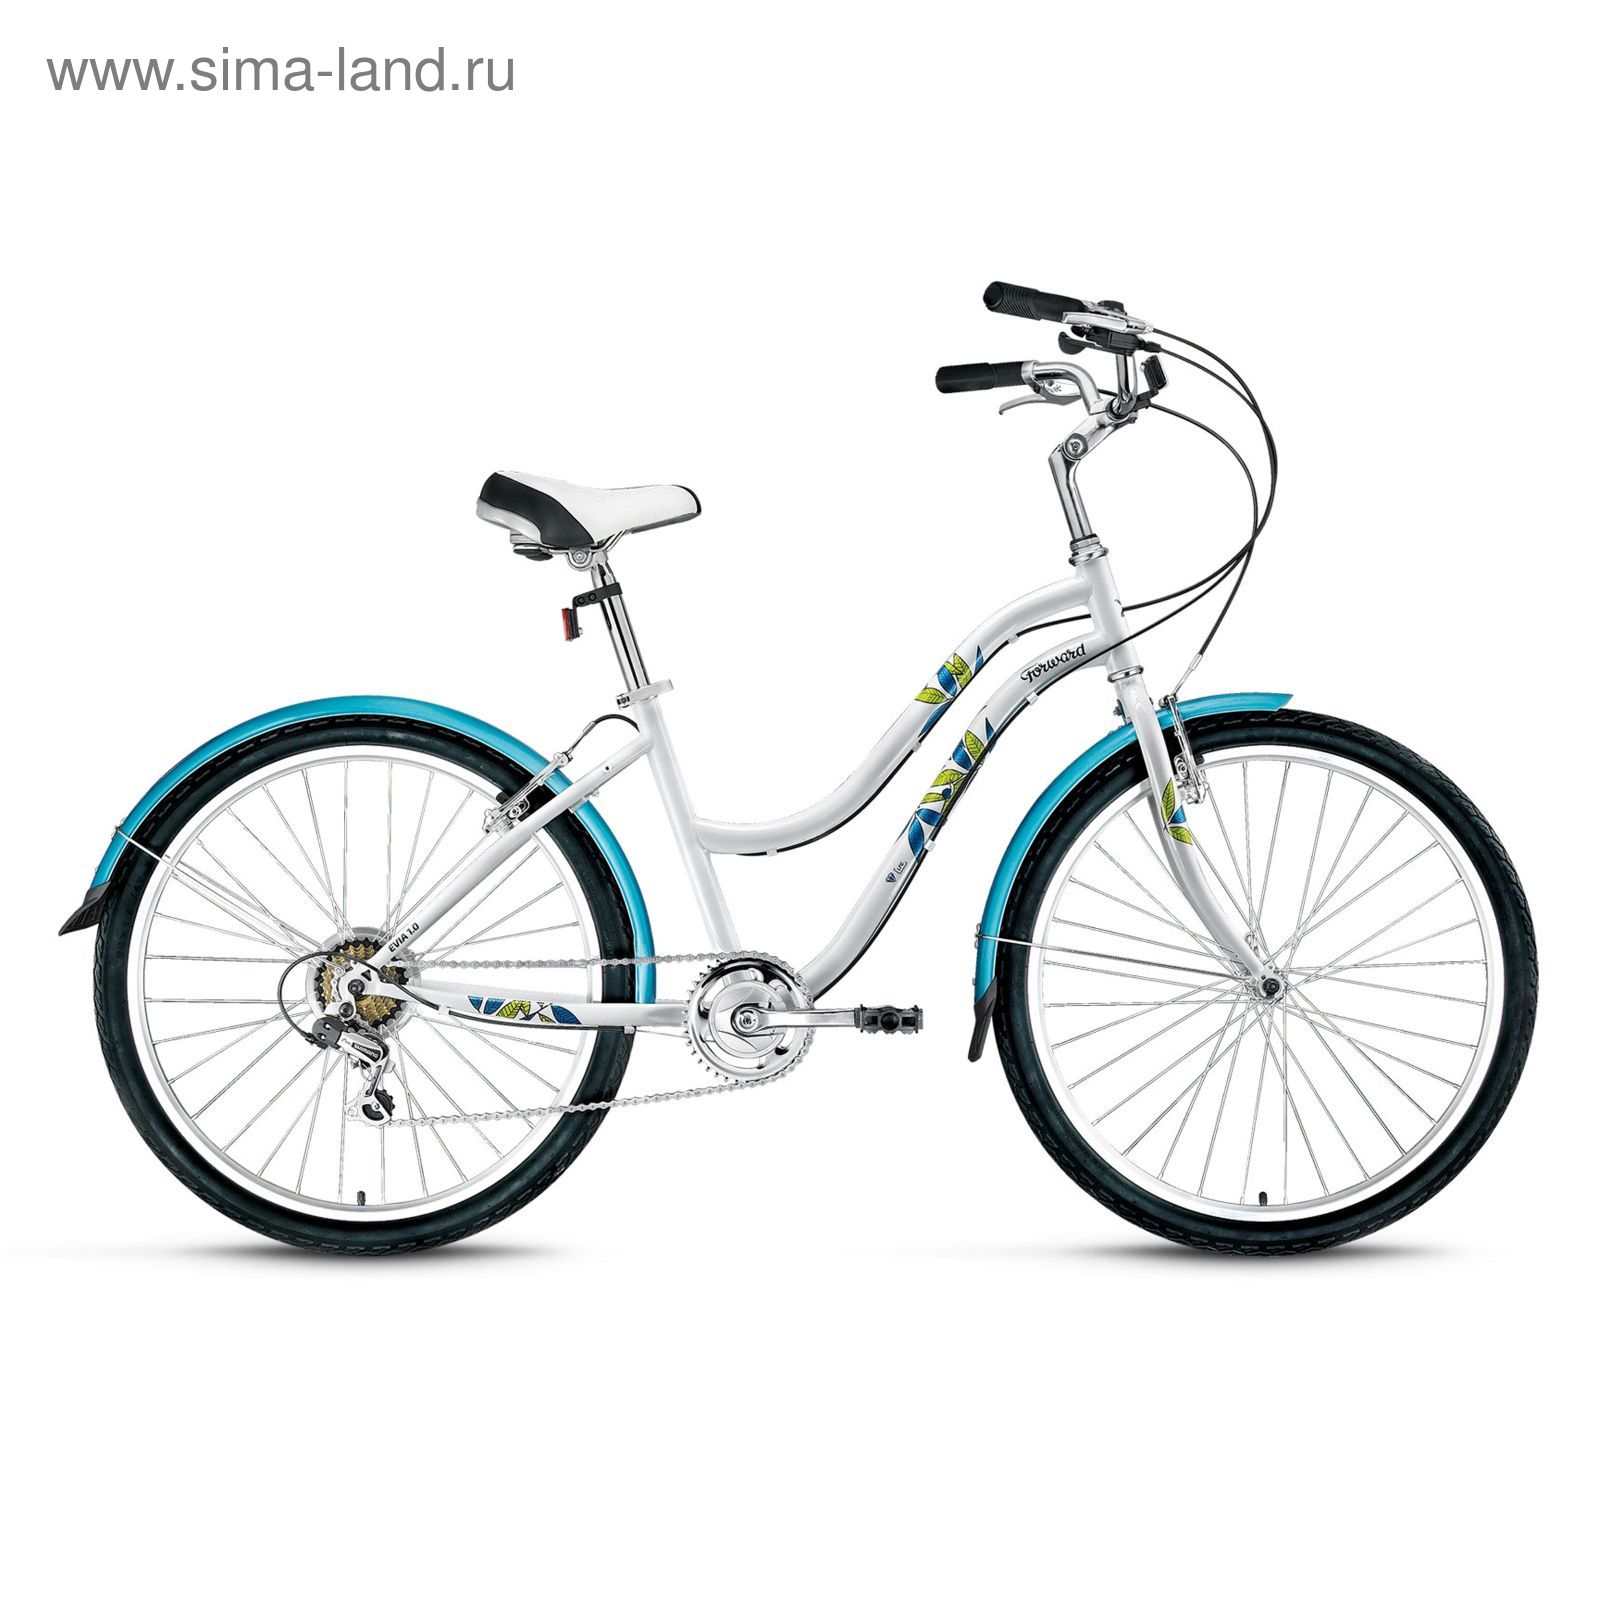 Велосипед 26" Forward Evia 1.0, 2016, цвет белый, размер 16"